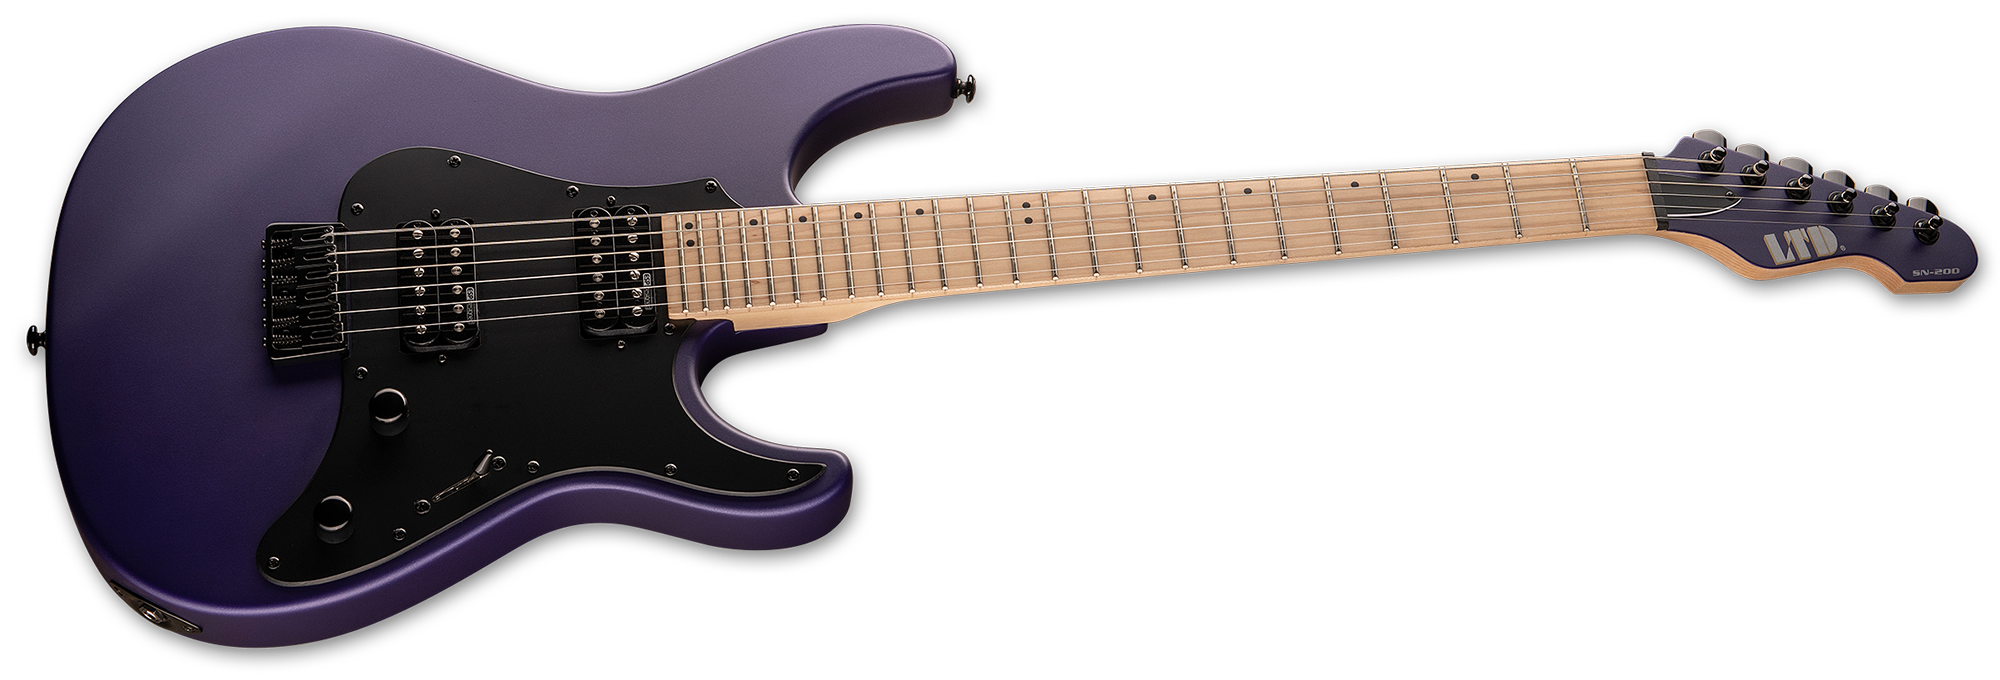 Ltd Sn-200ht Hh Ht Mn - Dark Metallic Purple Satin - Str shape electric guitar - Variation 1